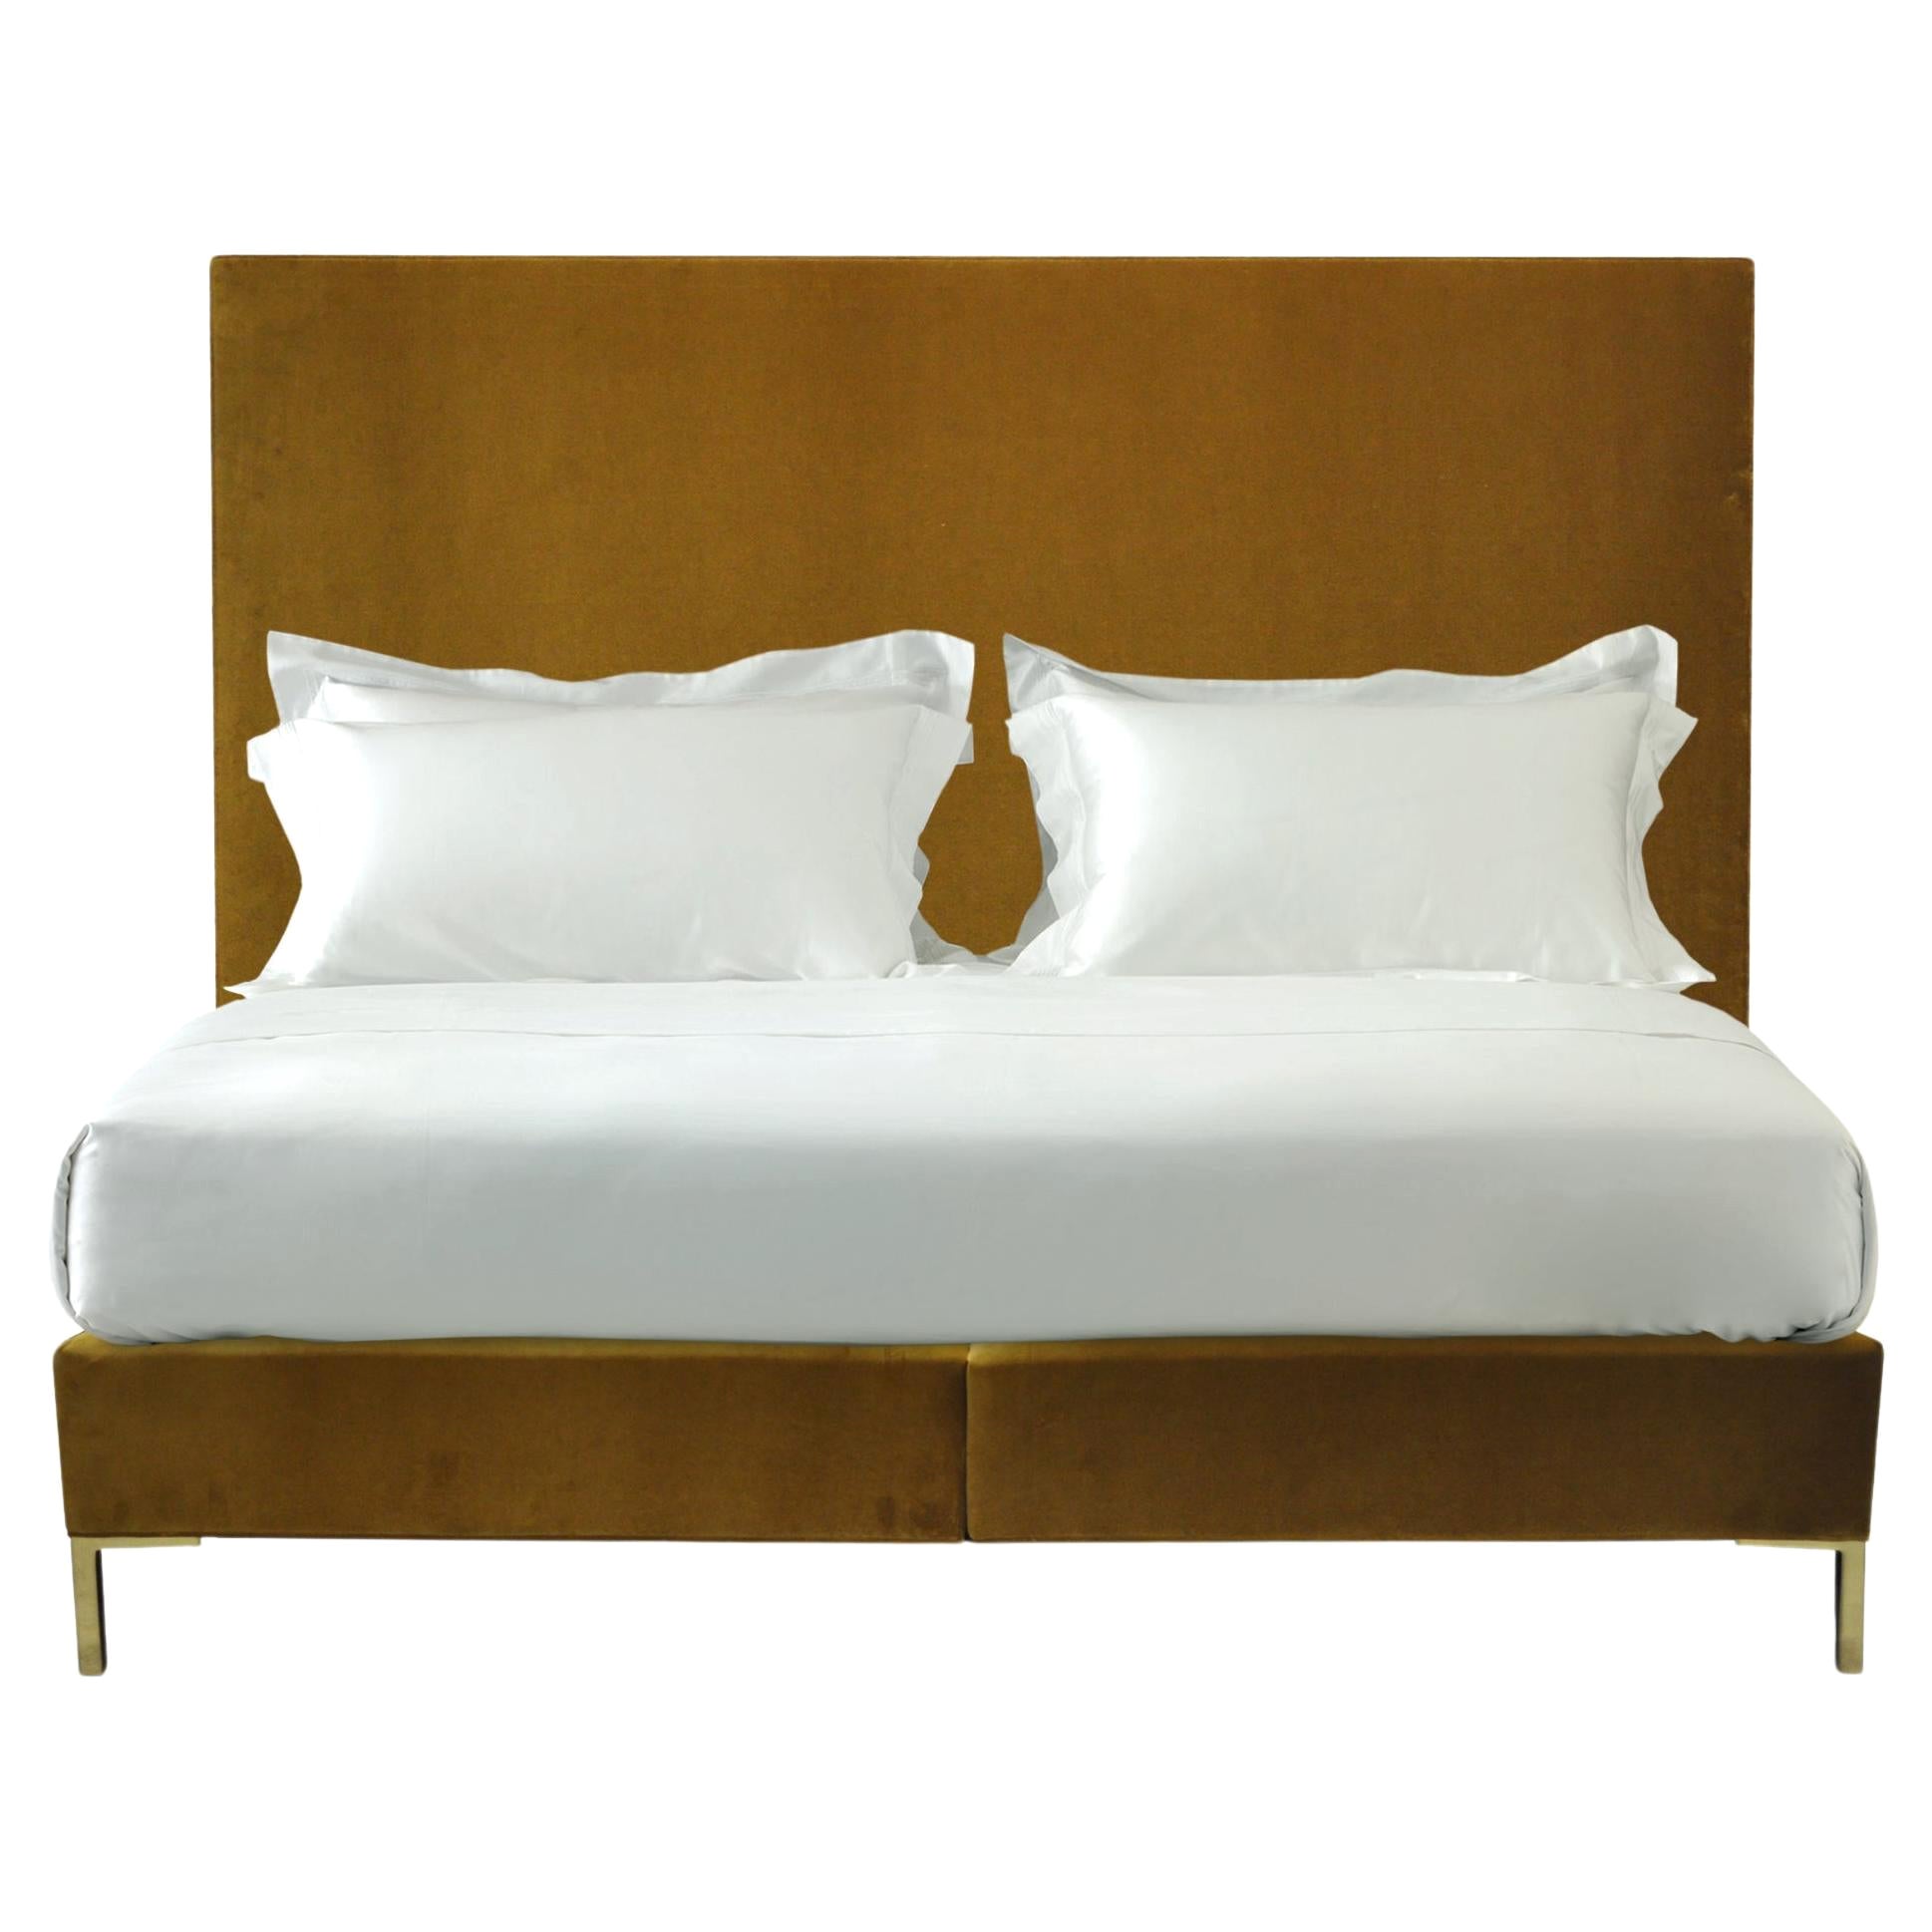 Bespoke Savoir Harlech Headboard and Nº3 Bed Set, California King Size For Sale